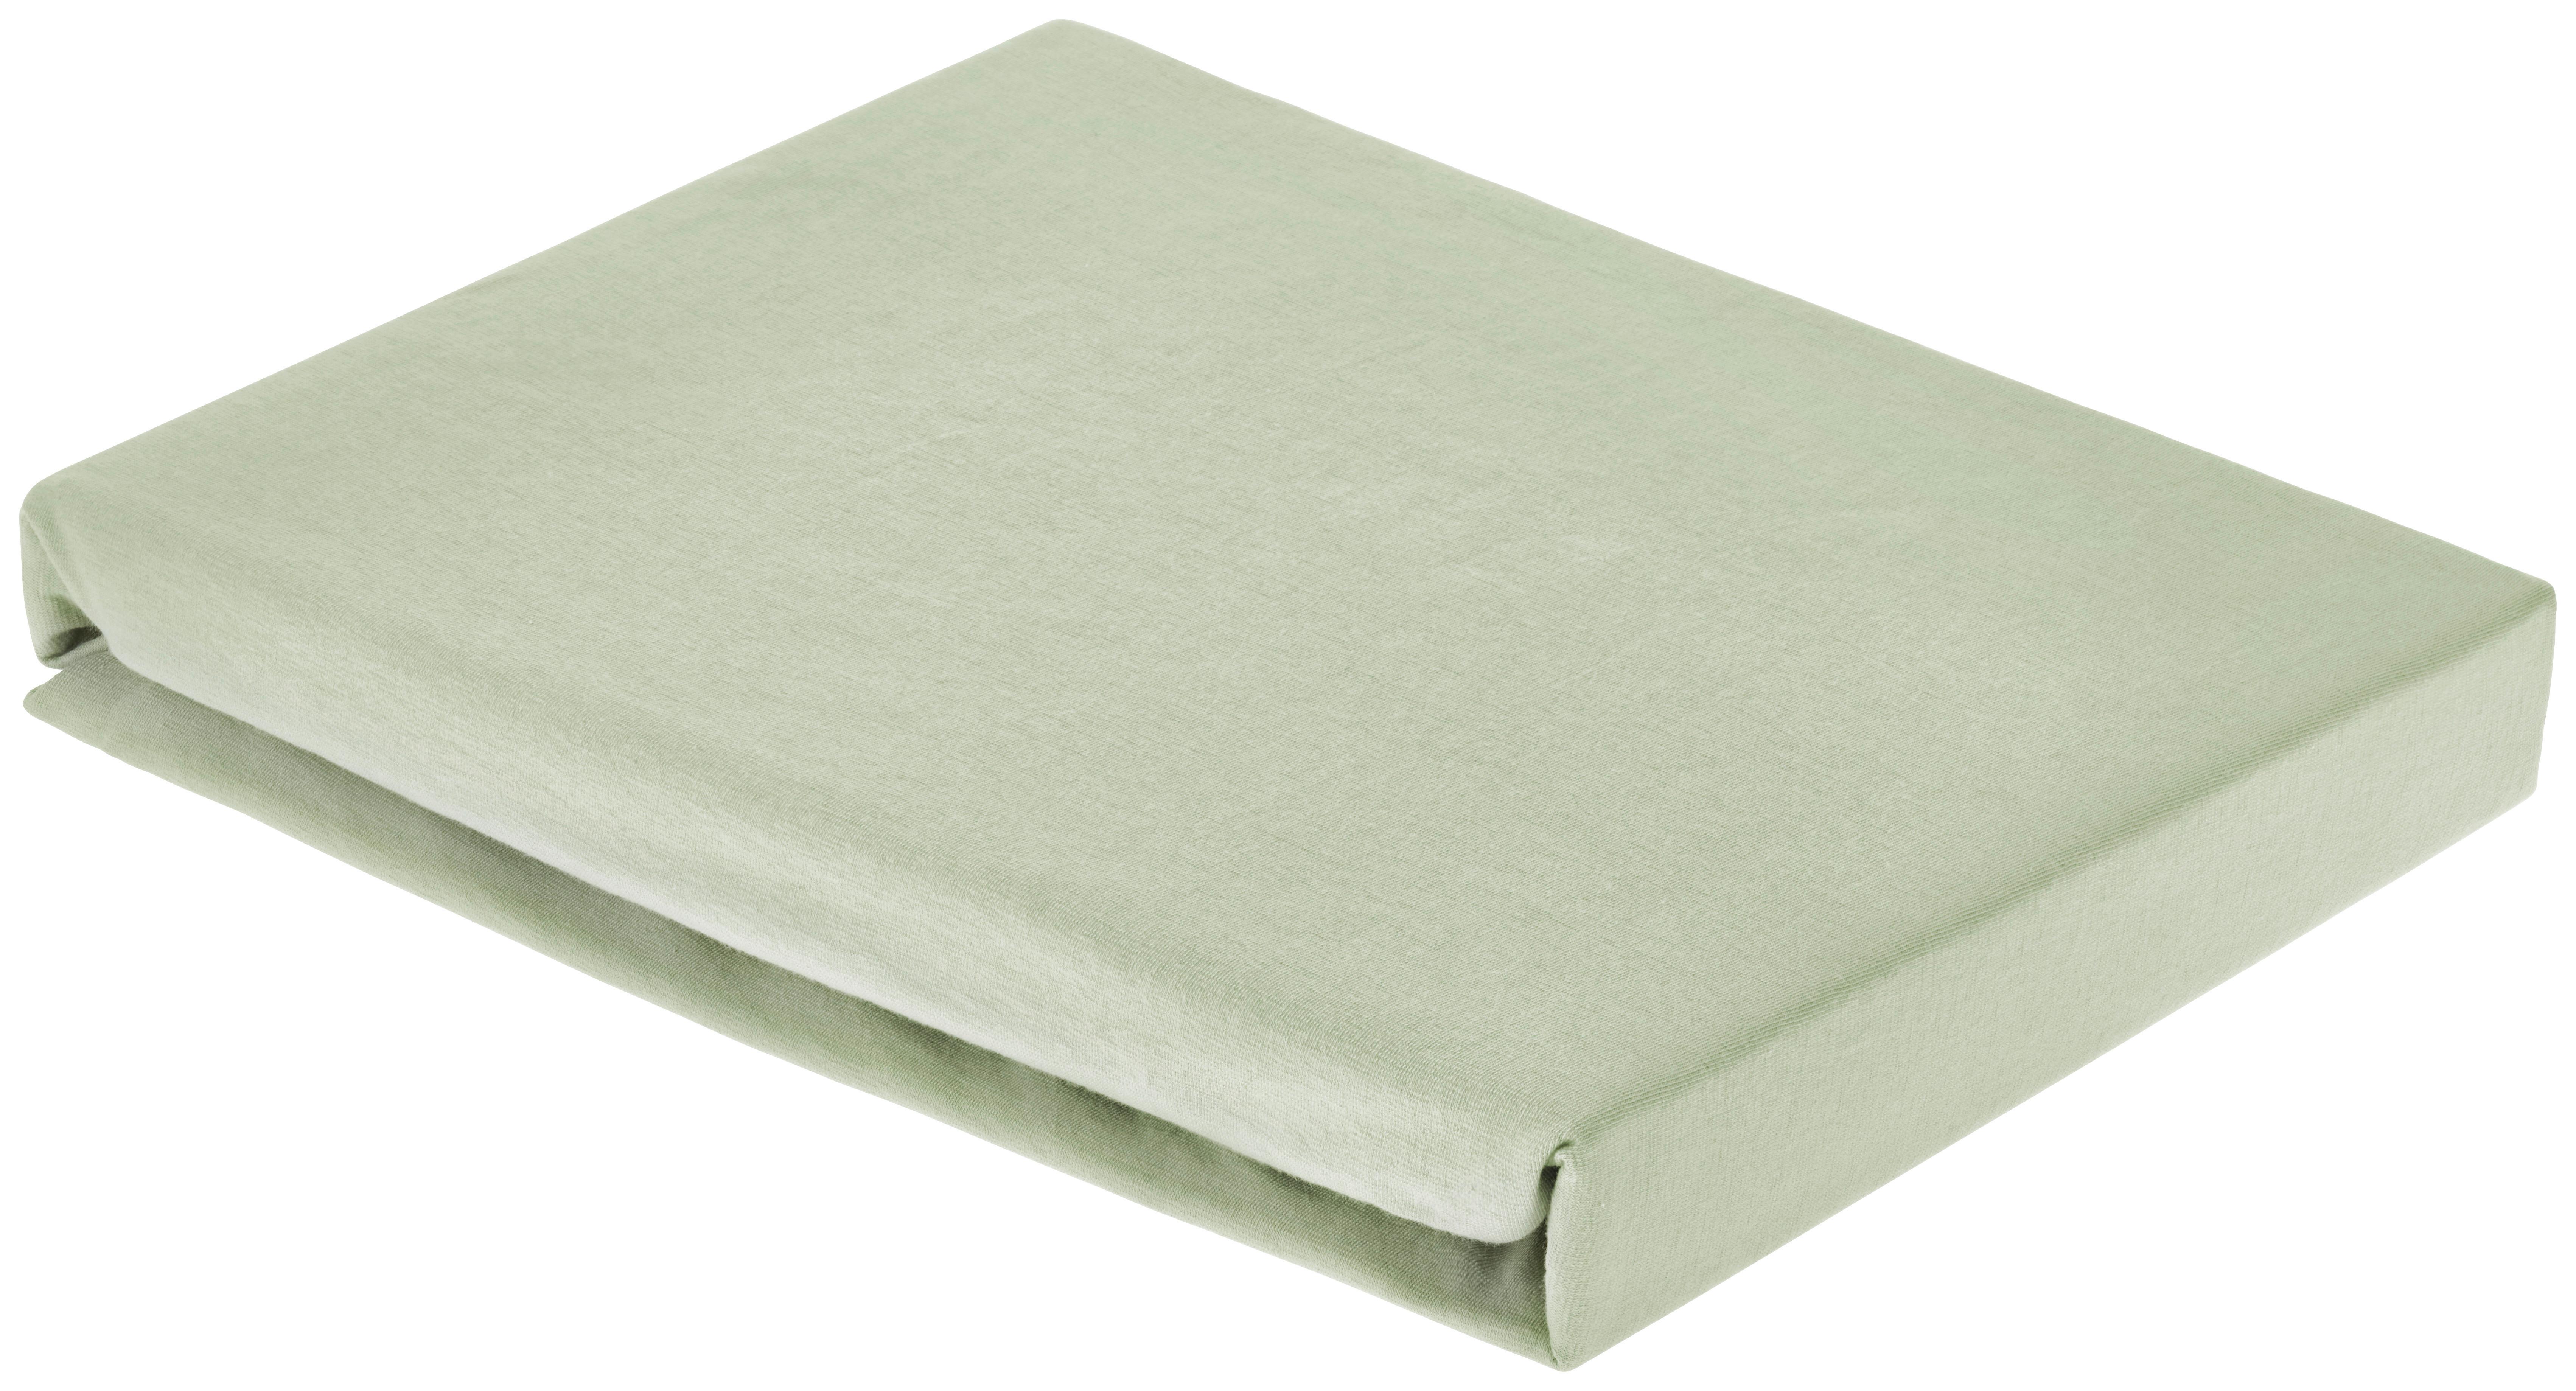 Napenjalna Rjuha Za Nadvložek Elasthan Topper -Ext- - zelena, tekstil (160/200/15cm) - Premium Living